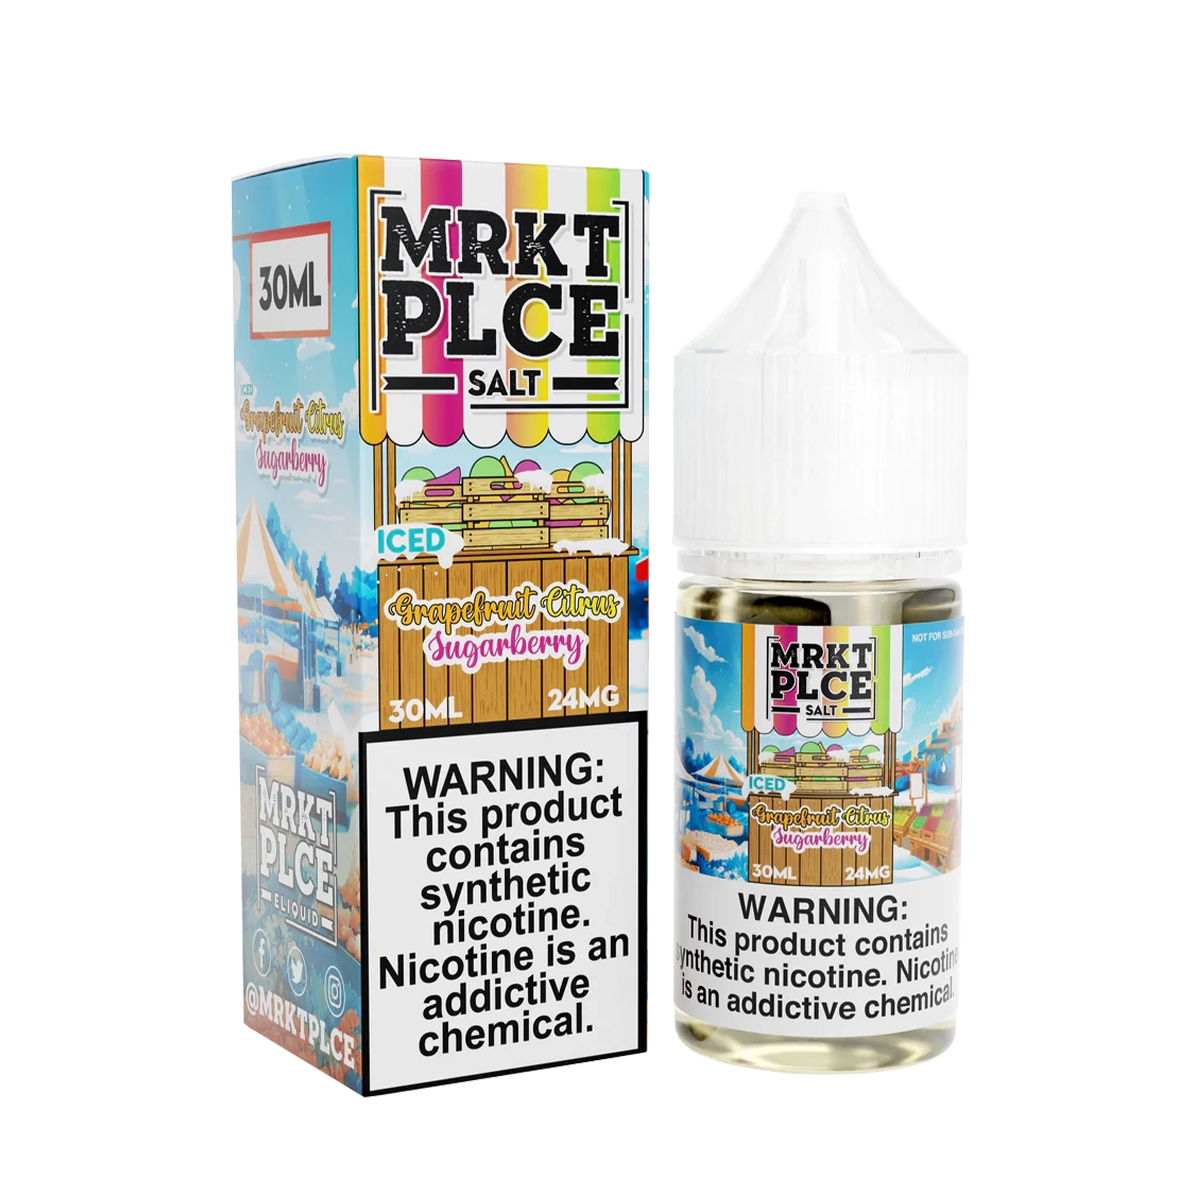 MRKT PLCE Salt Nicotine Vape Juice 24 Mg 30 Ml Iced Grapefruit Citrus Sugarberry